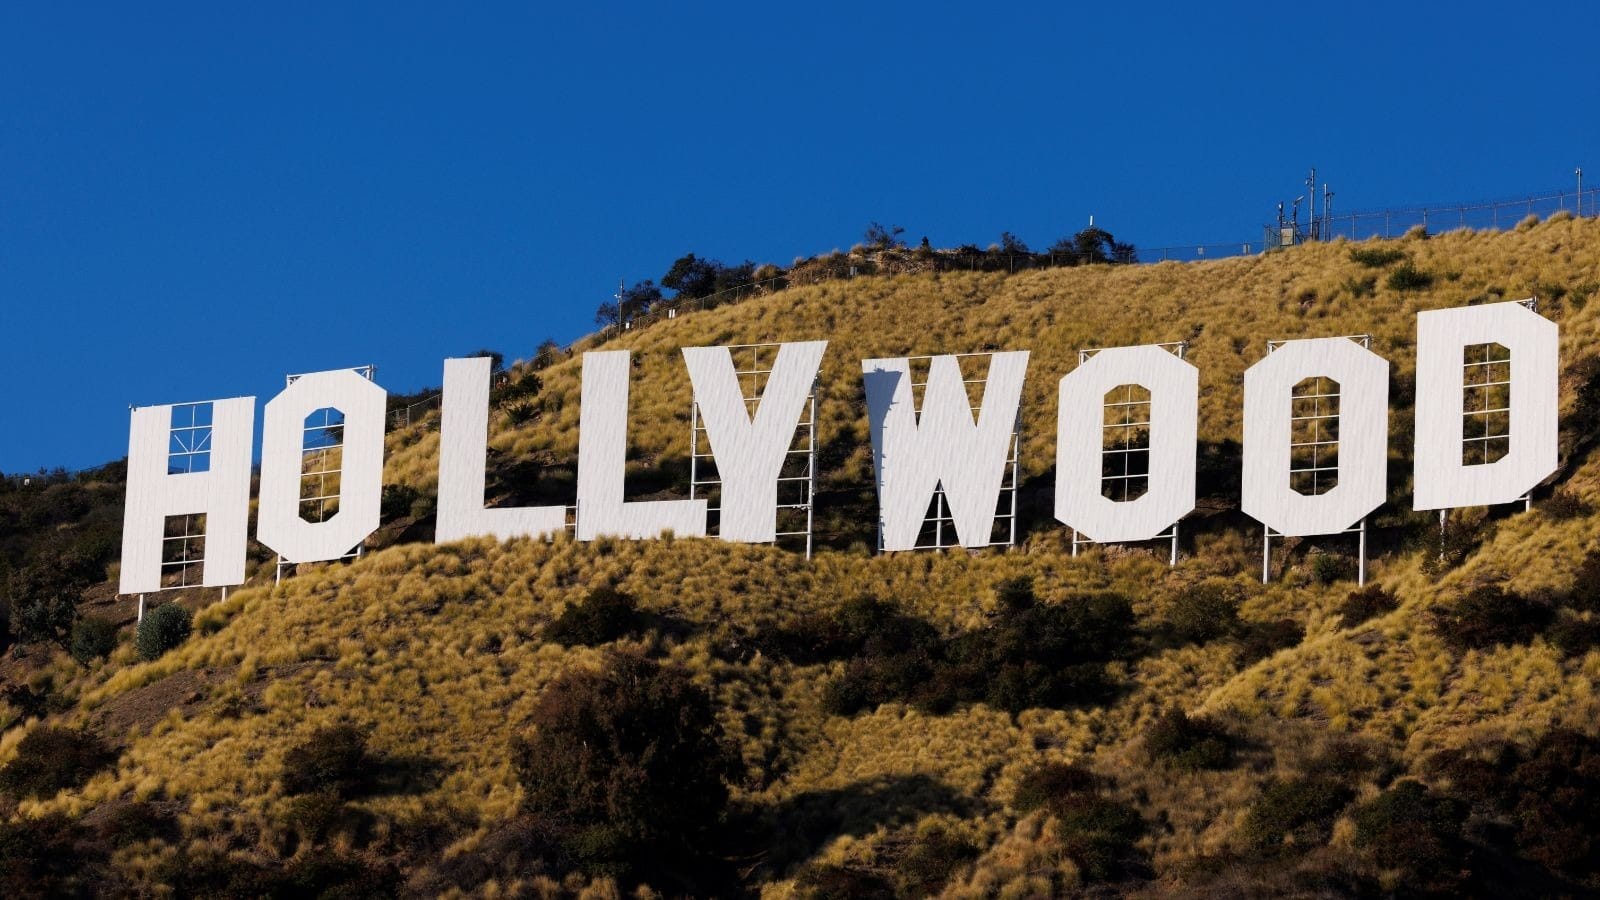 Letreiro de Hollywood completa 100 anos e vai ser reformado para